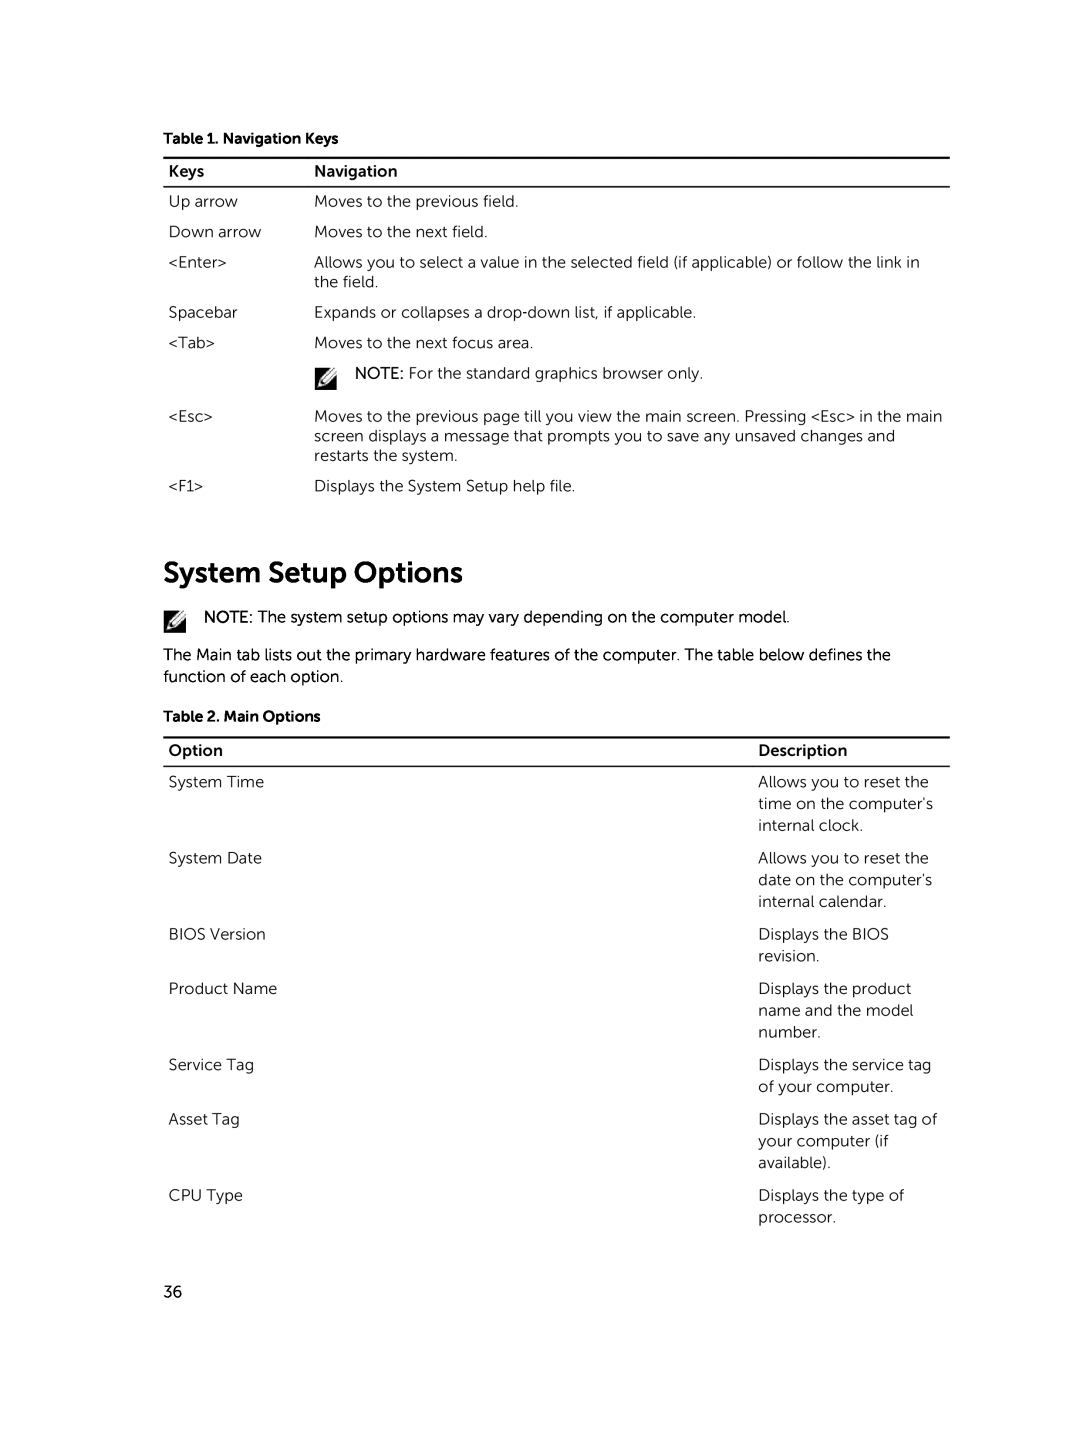 Dell P45F001 owner manual System Setup Options, Navigation Keys, Main Options 